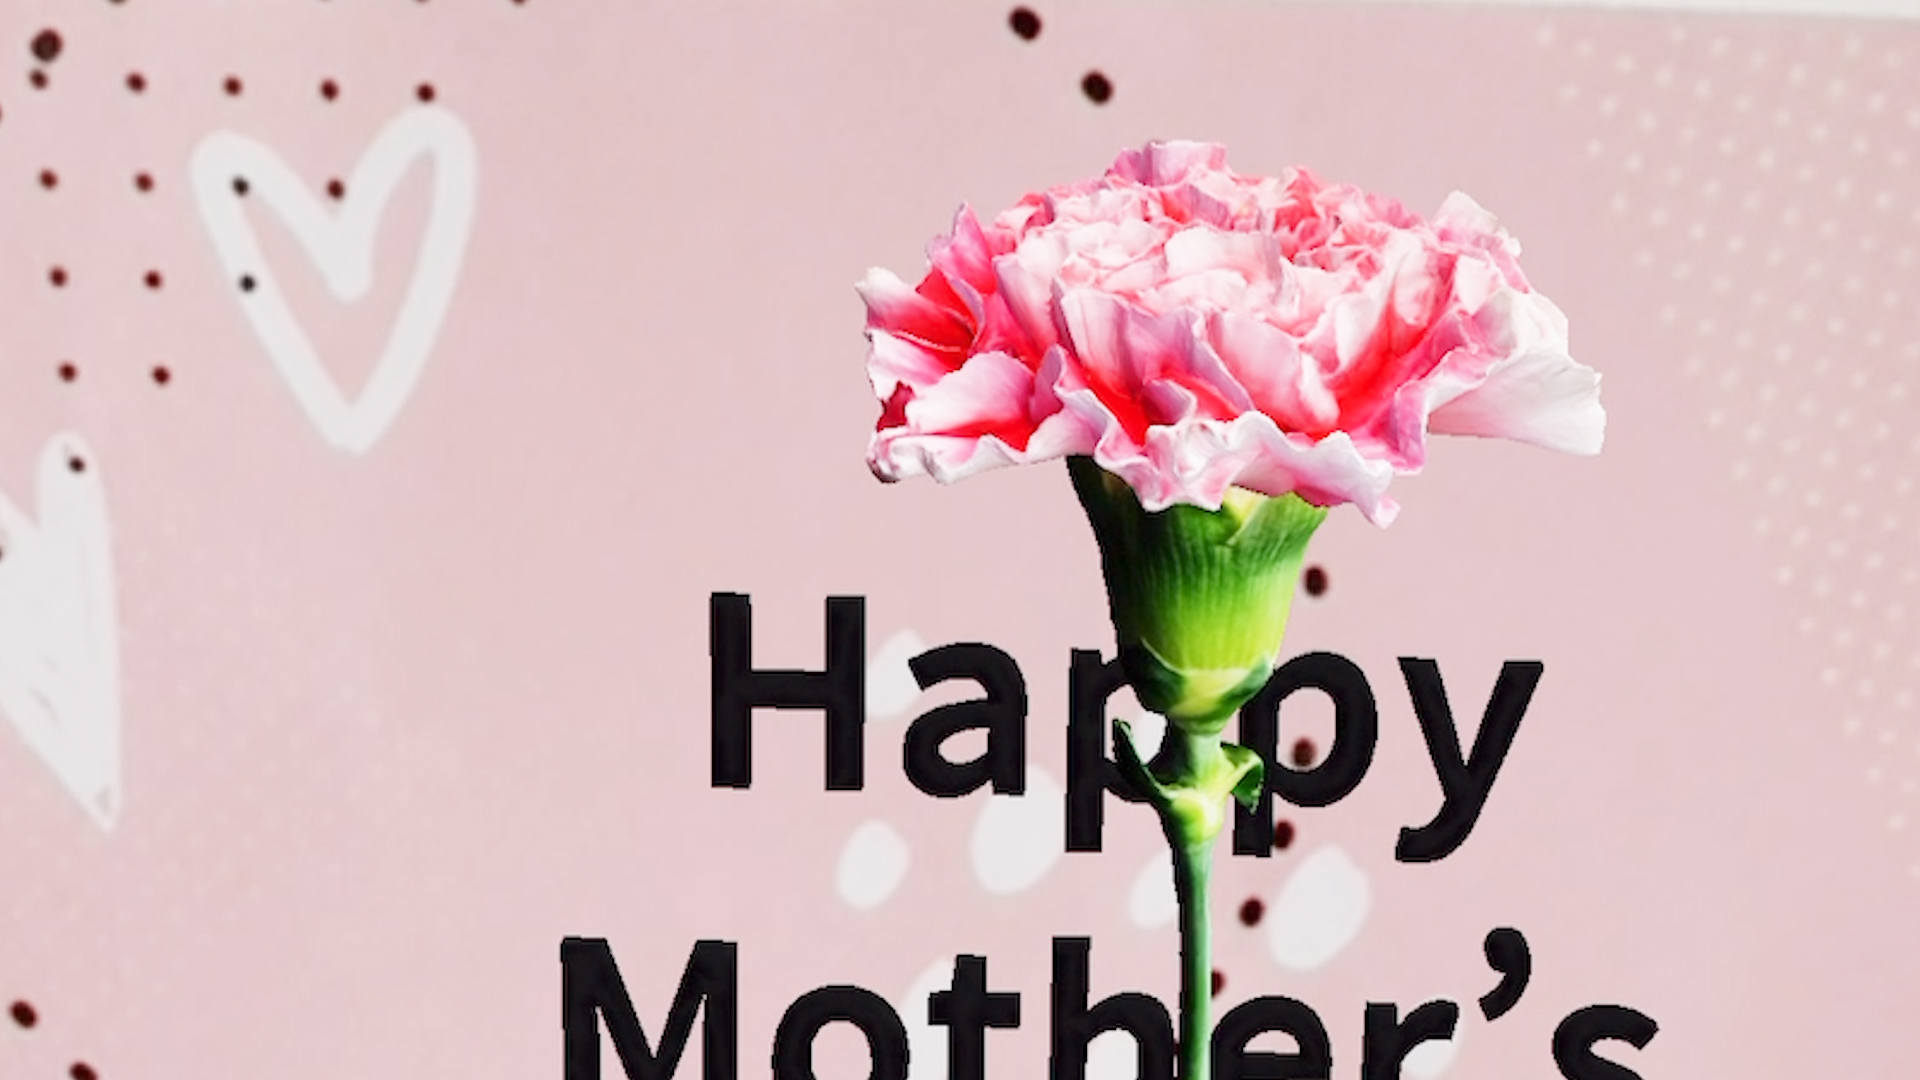 Virtual AR Card Design：Mother’s Day